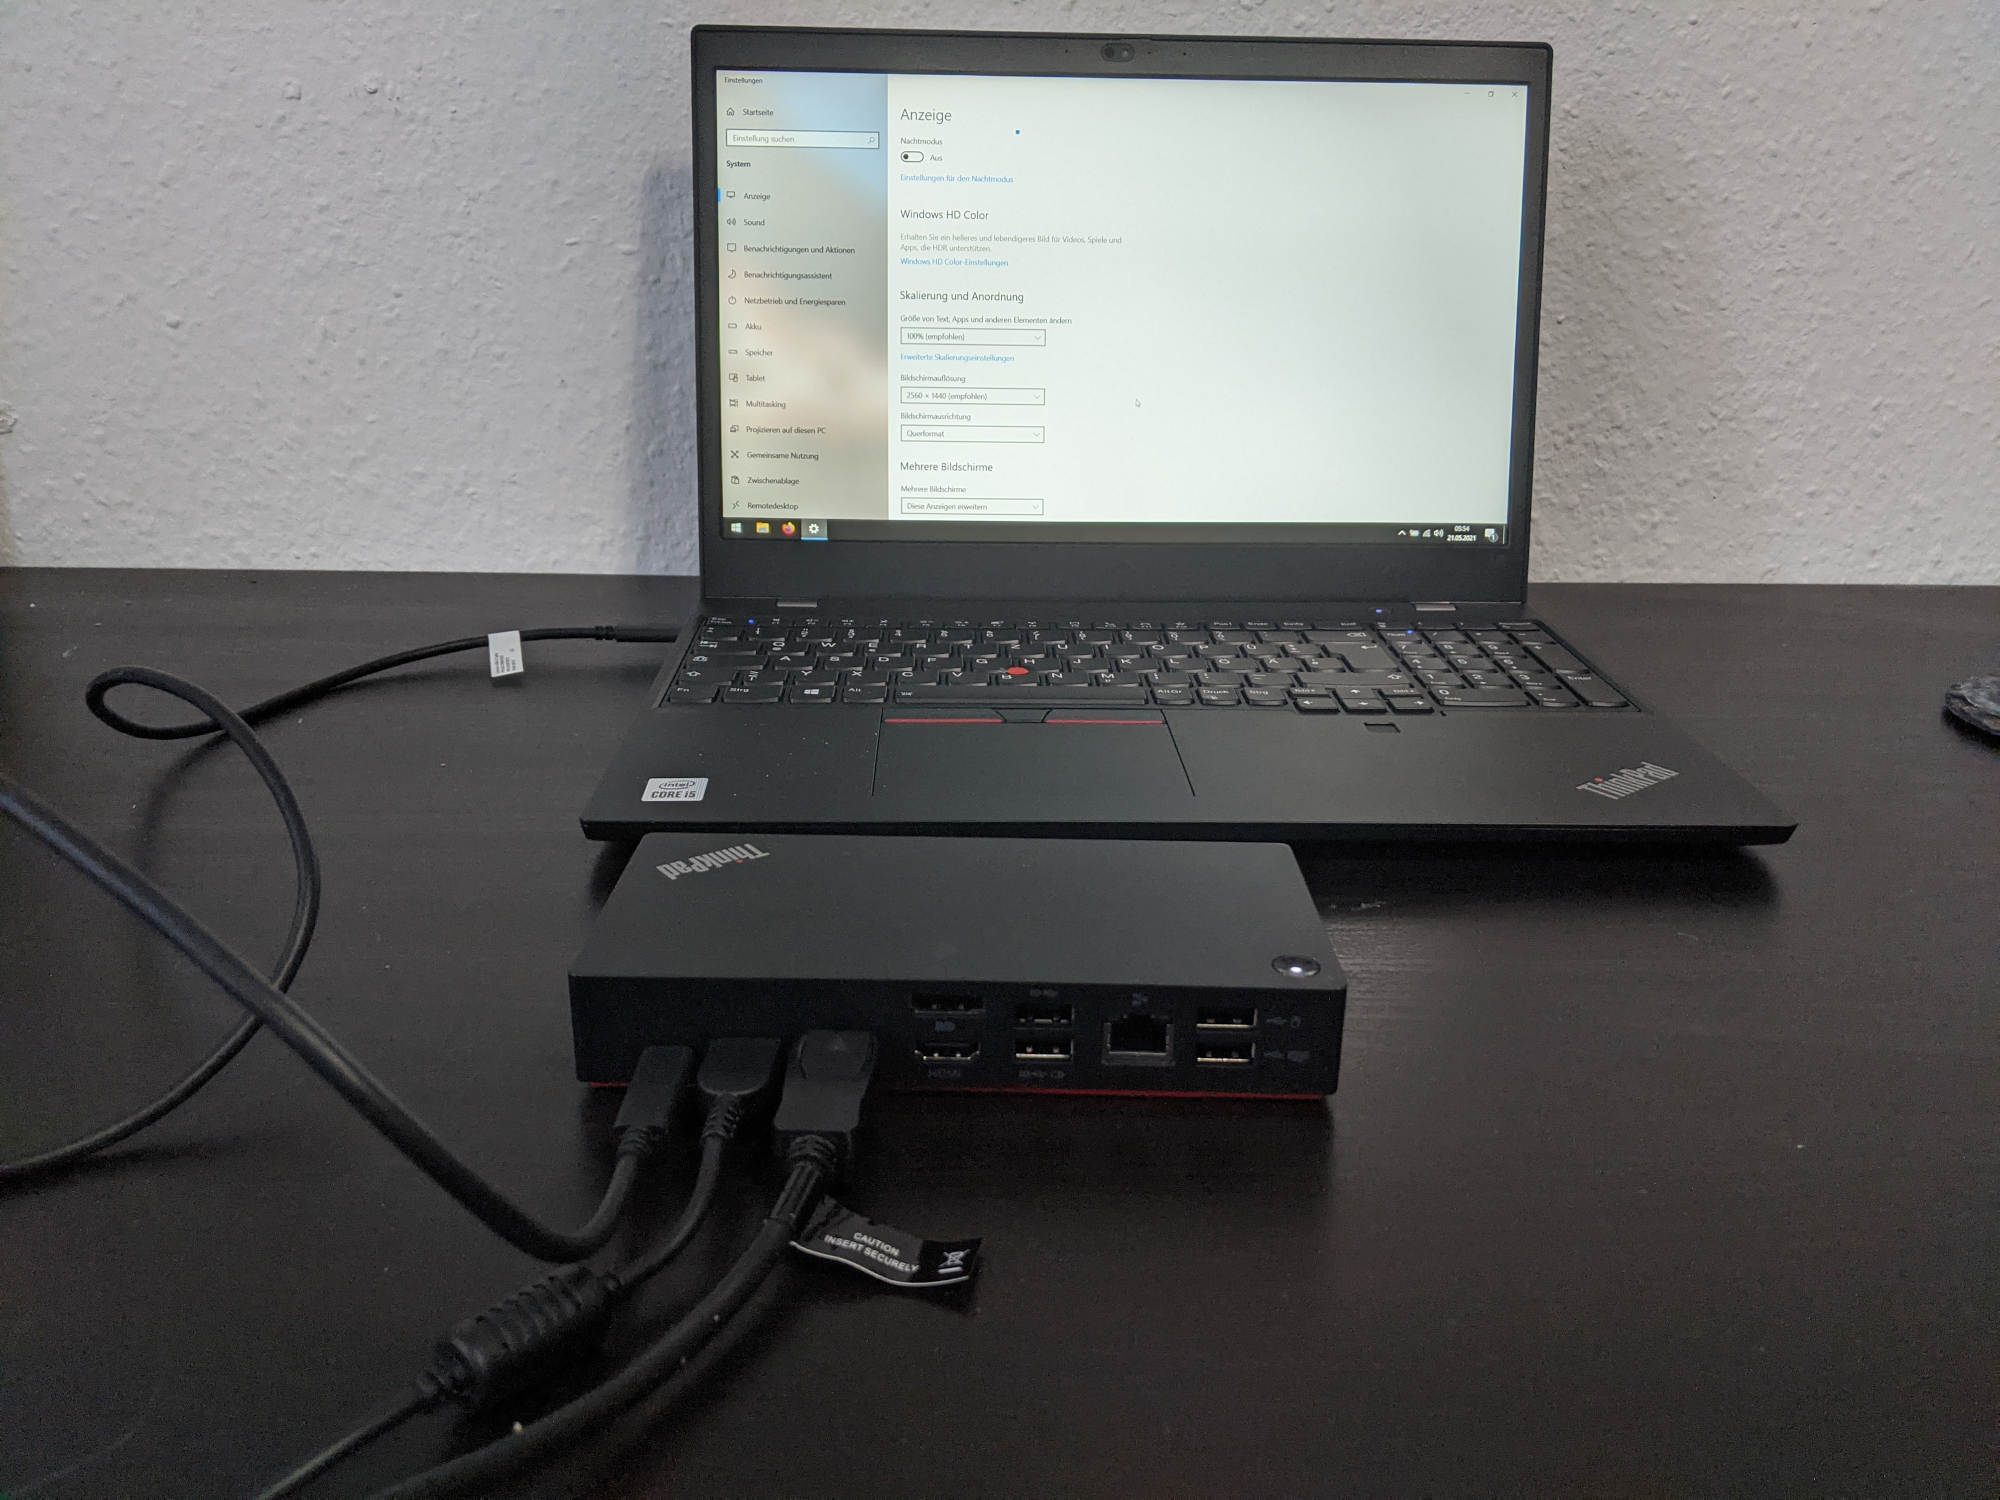 ThinkPad-USB-C-Dock-Gen-2-nur-1440p-statt-2160p - Deutsche Community -  LENOVO COMMUNITY